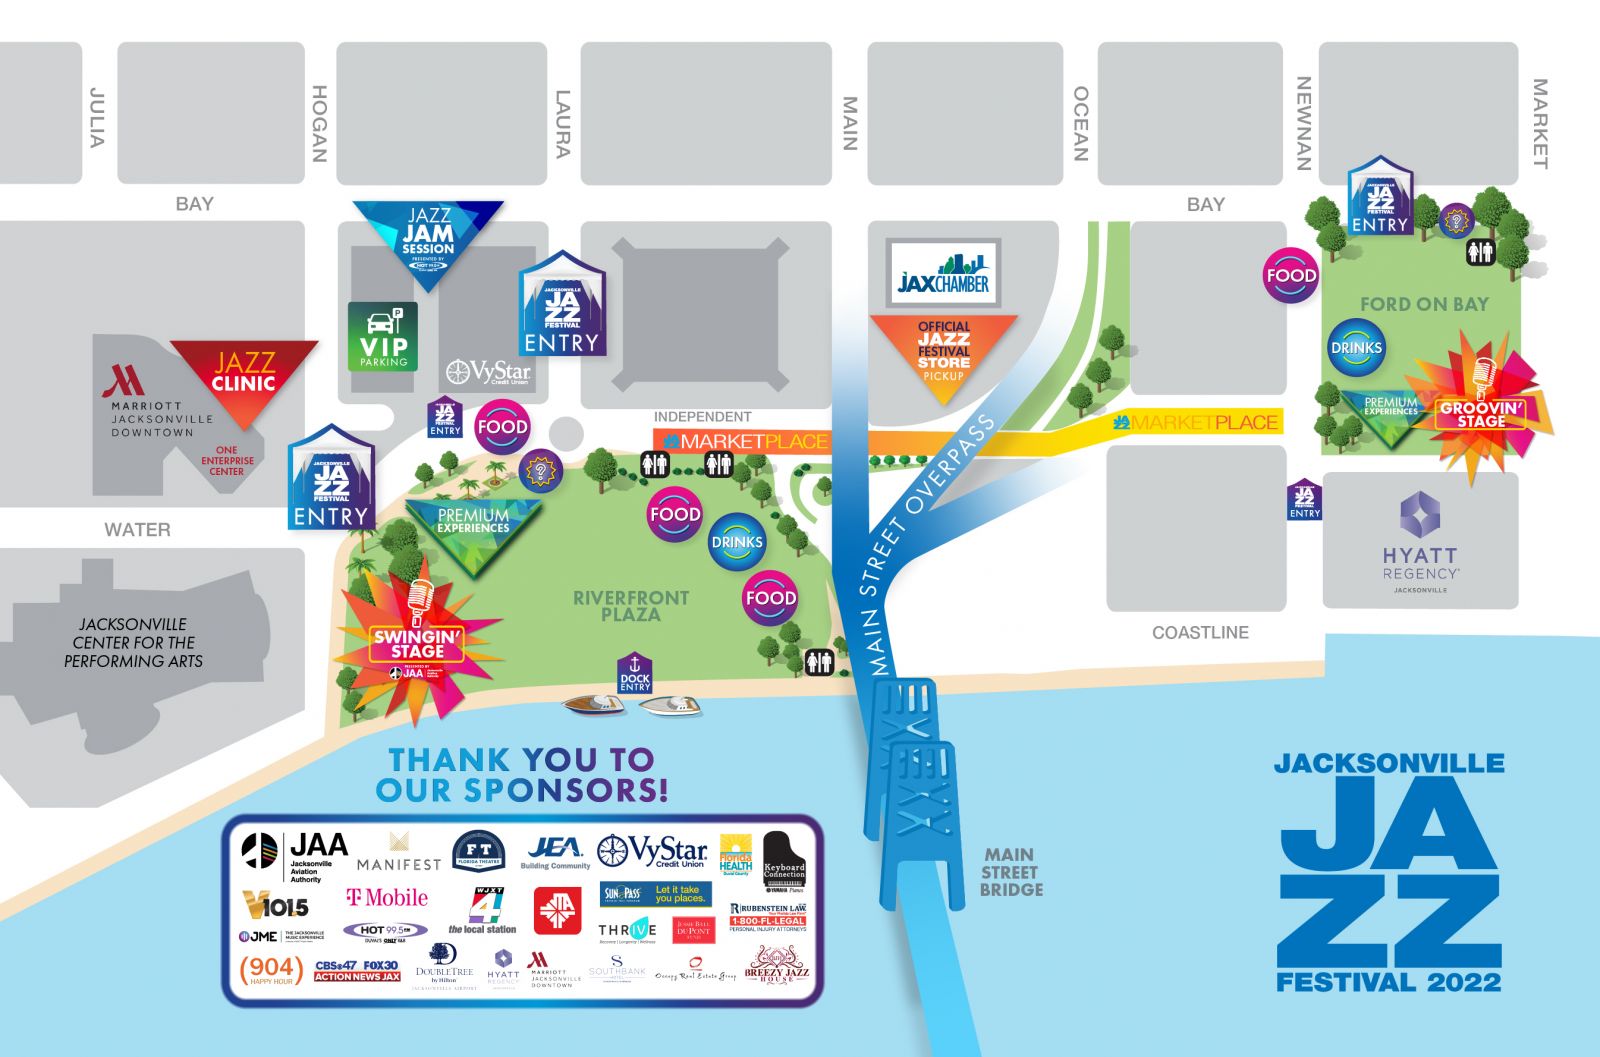 Jacksonville Jazz Fest Returns This Weekend Lineup, Map & Full Details